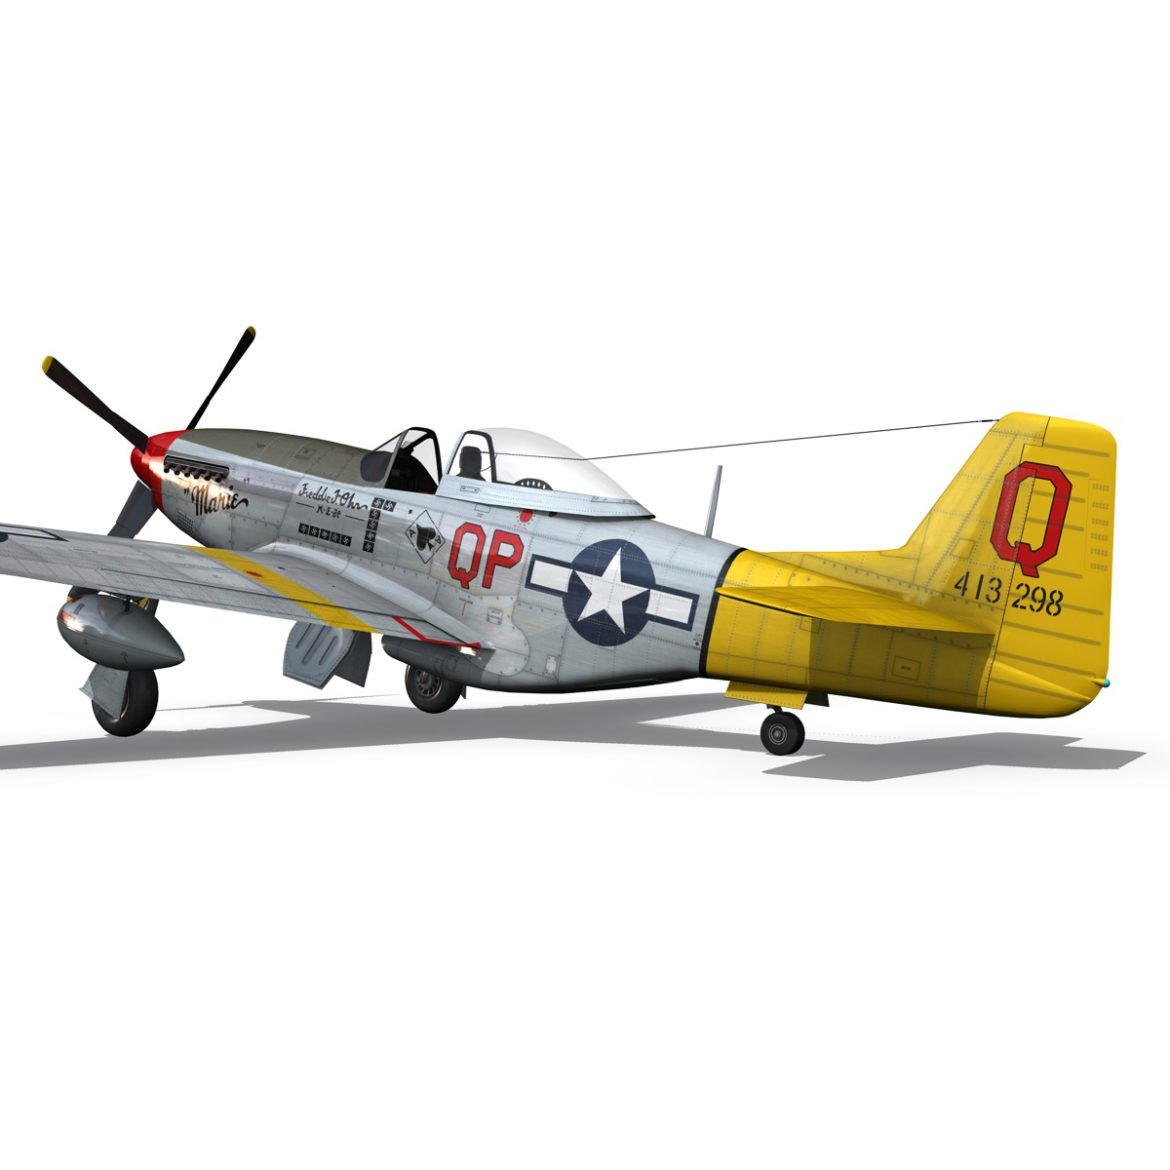 north american p-51d mustang – marie 3d model fbx c4d lwo obj 294308